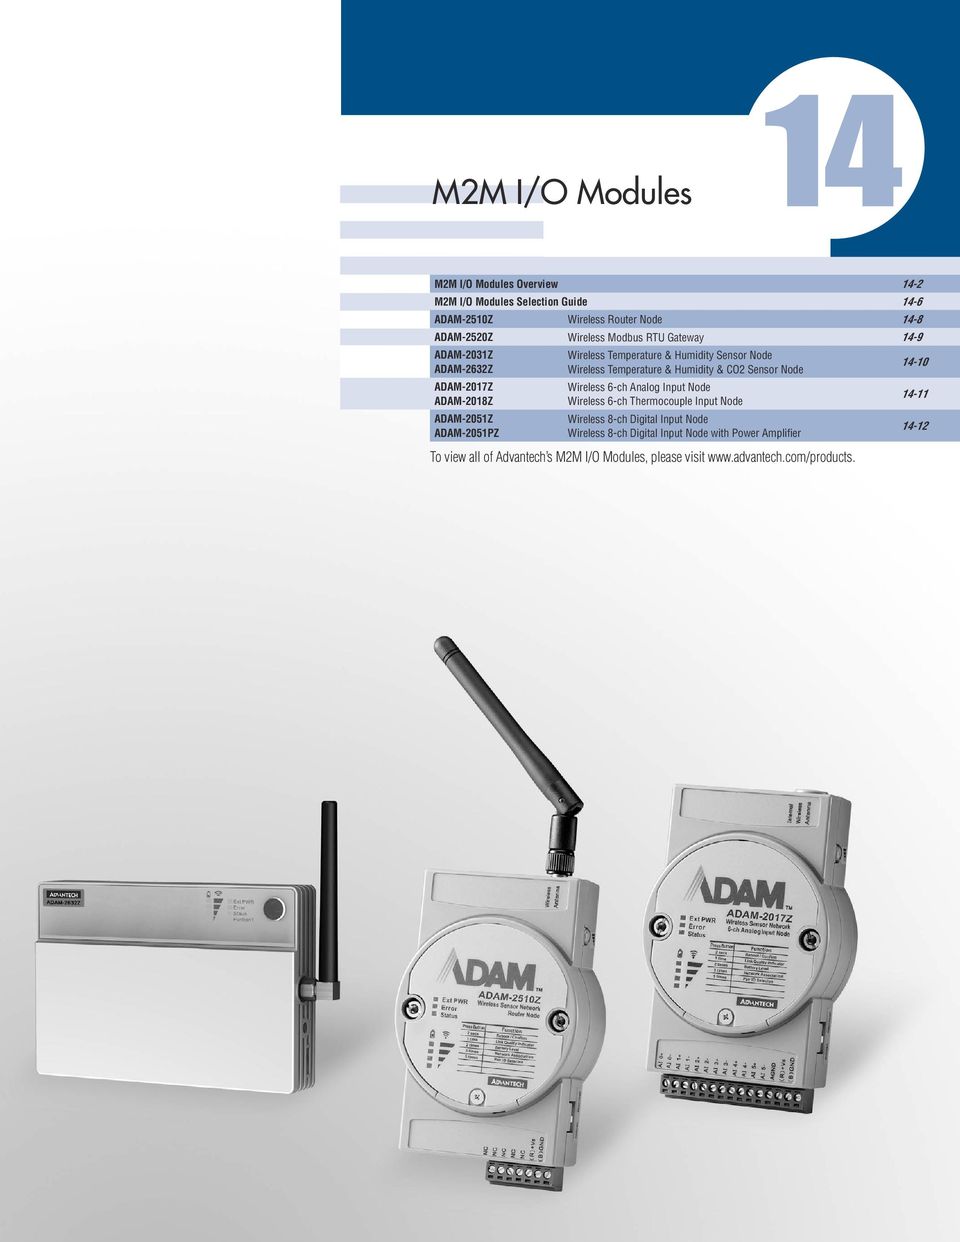 Temperature & Humidity & CO2 Sensor Node Wireless 6-ch Analog Input Node Wireless 6-ch Thermocouple Input Node Wireless 8-ch Digital Input Node